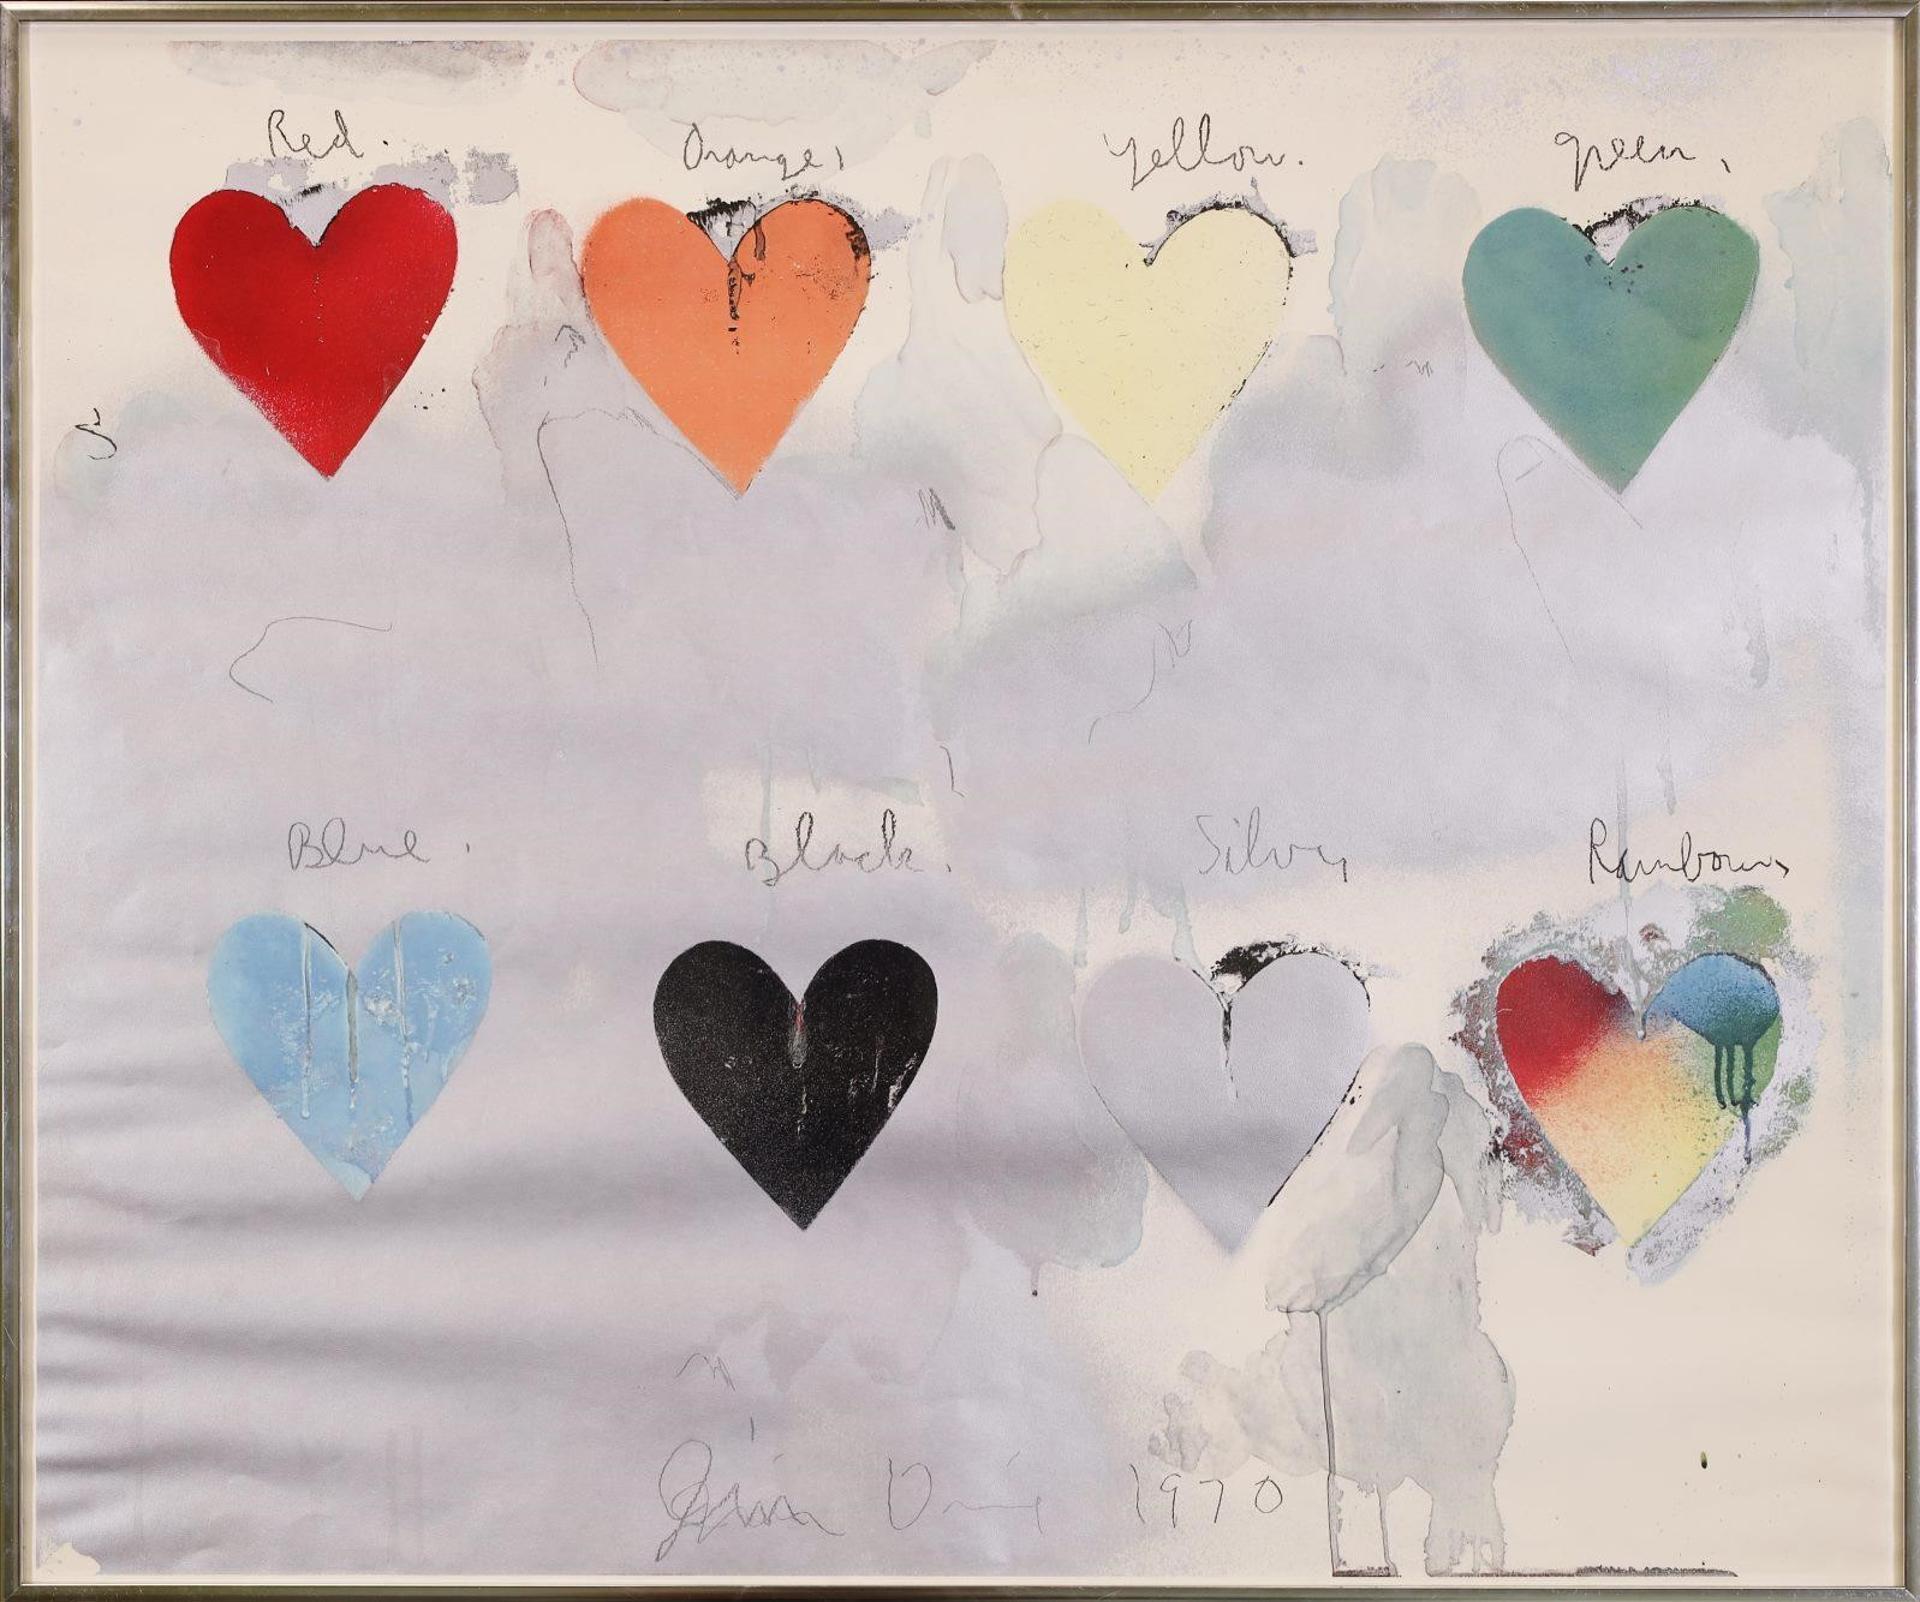 Jim Dine (1935) - Eight Hearts; 1970